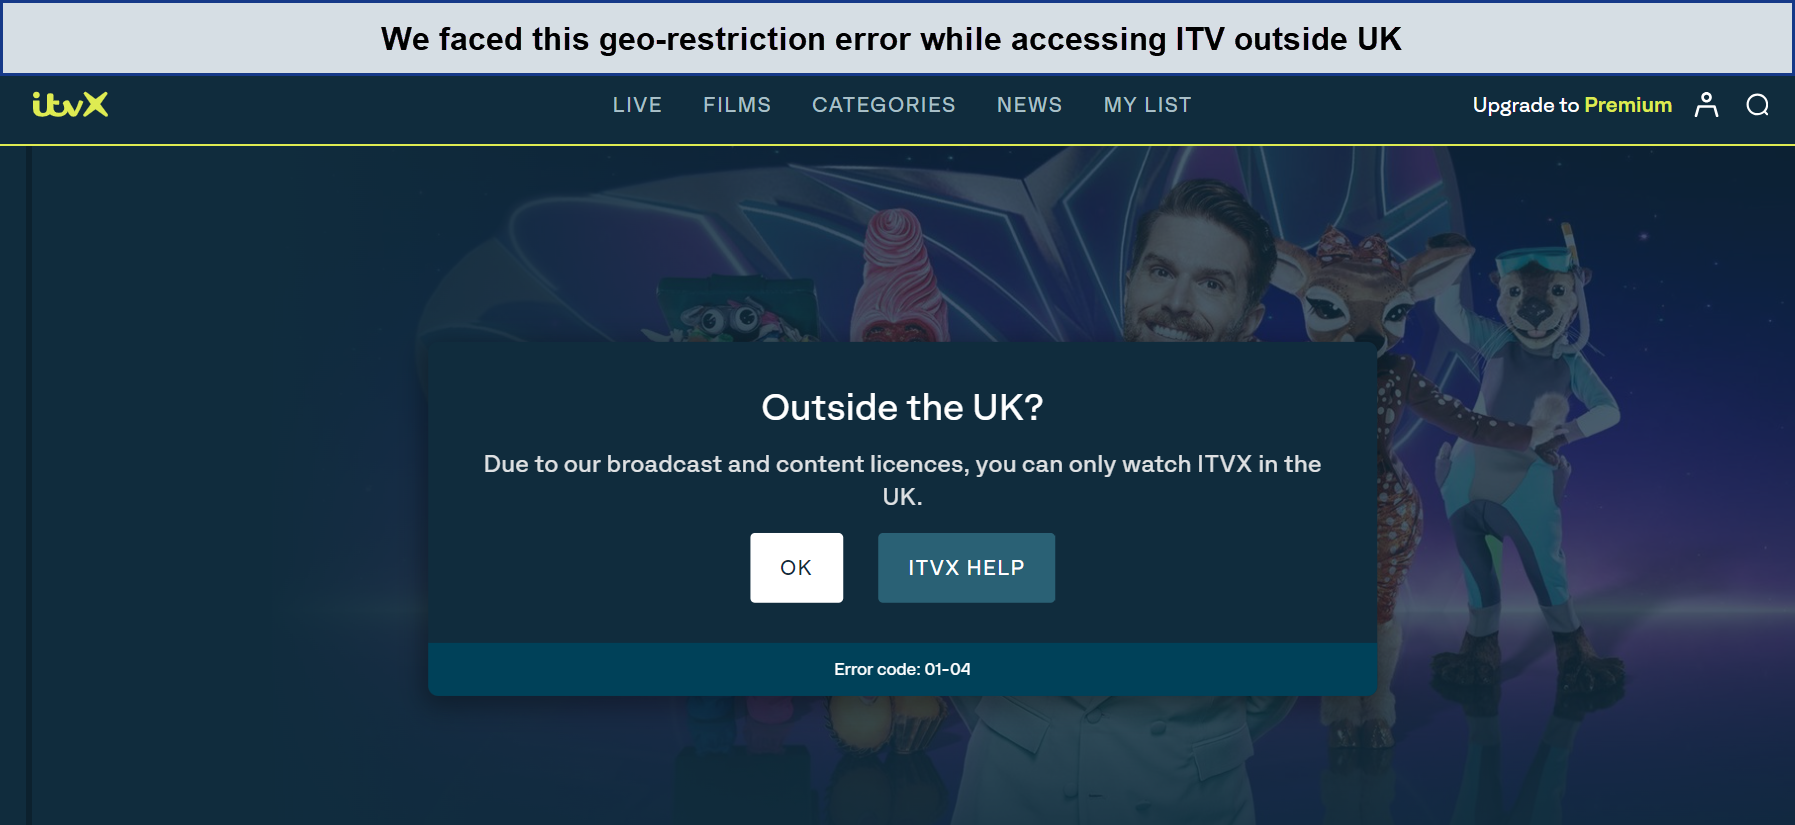 ITV-geo-restriction-error-in-New Zealand